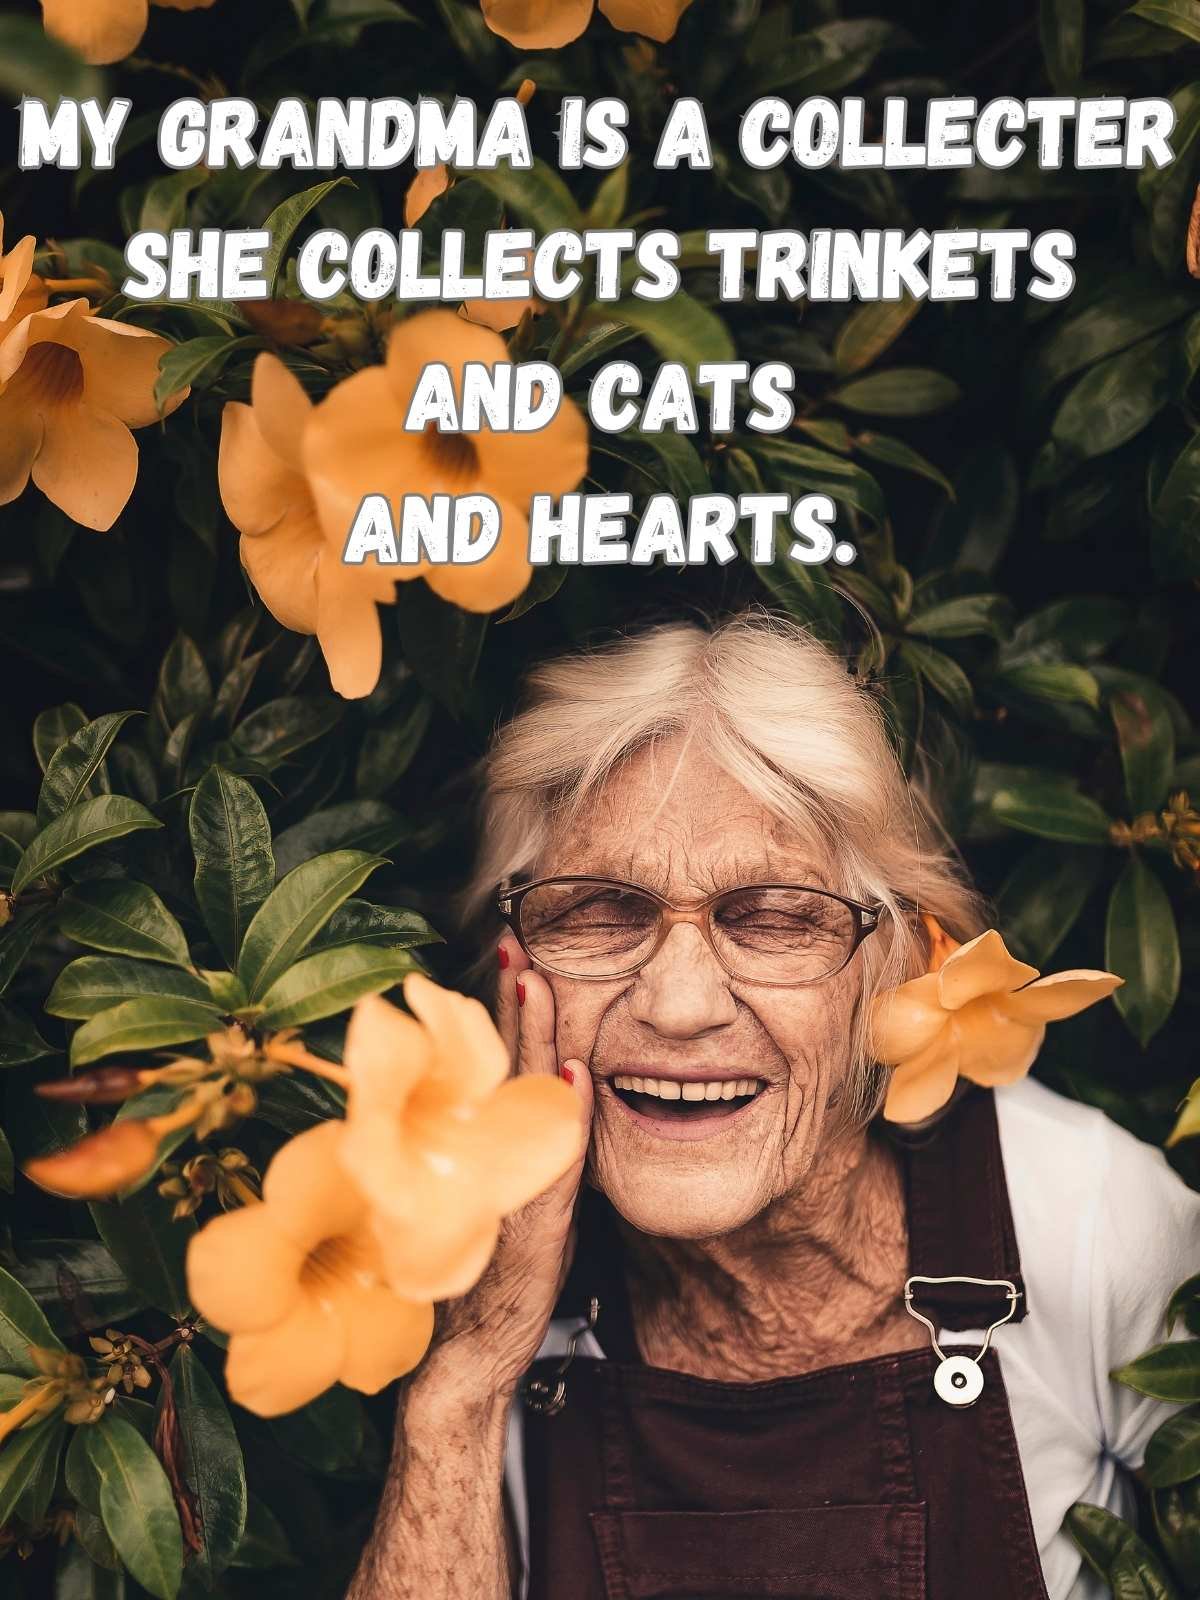 Photo of grandma against flowers